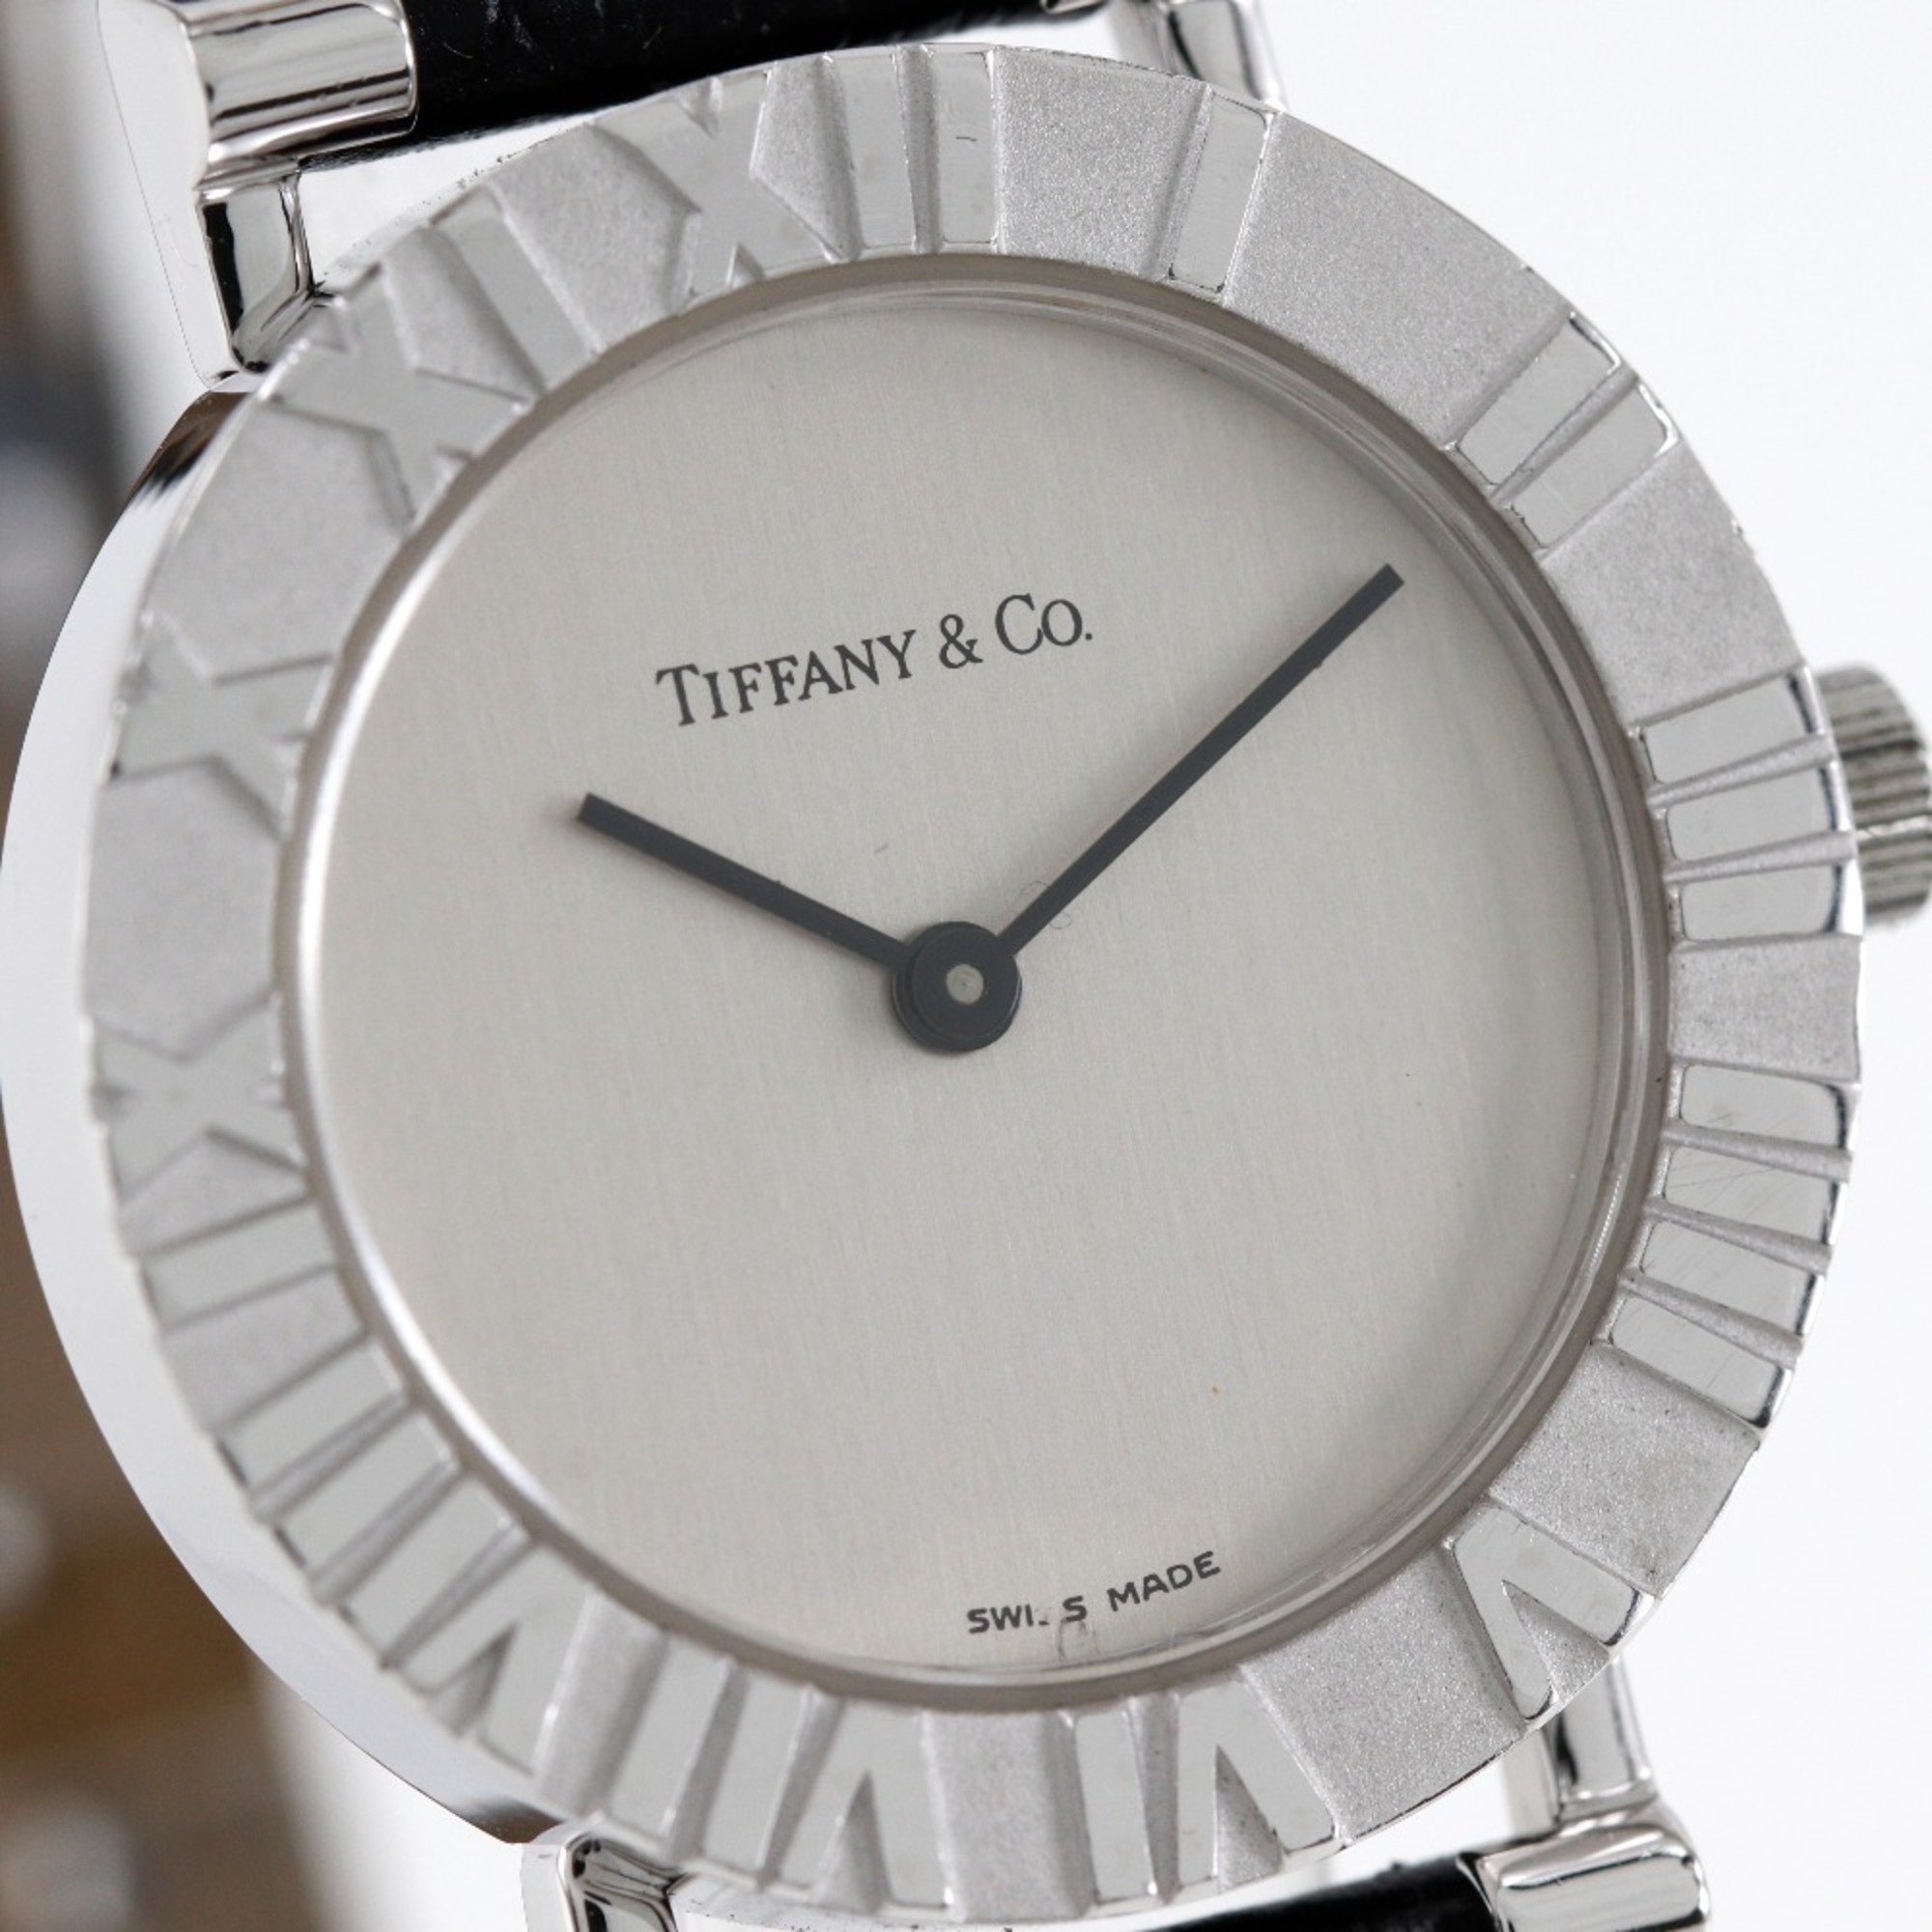 Tiffany & Co. Atlas Watch S0640 Silver 925 x Leather Quartz Analog Display Dial Women's R112224003